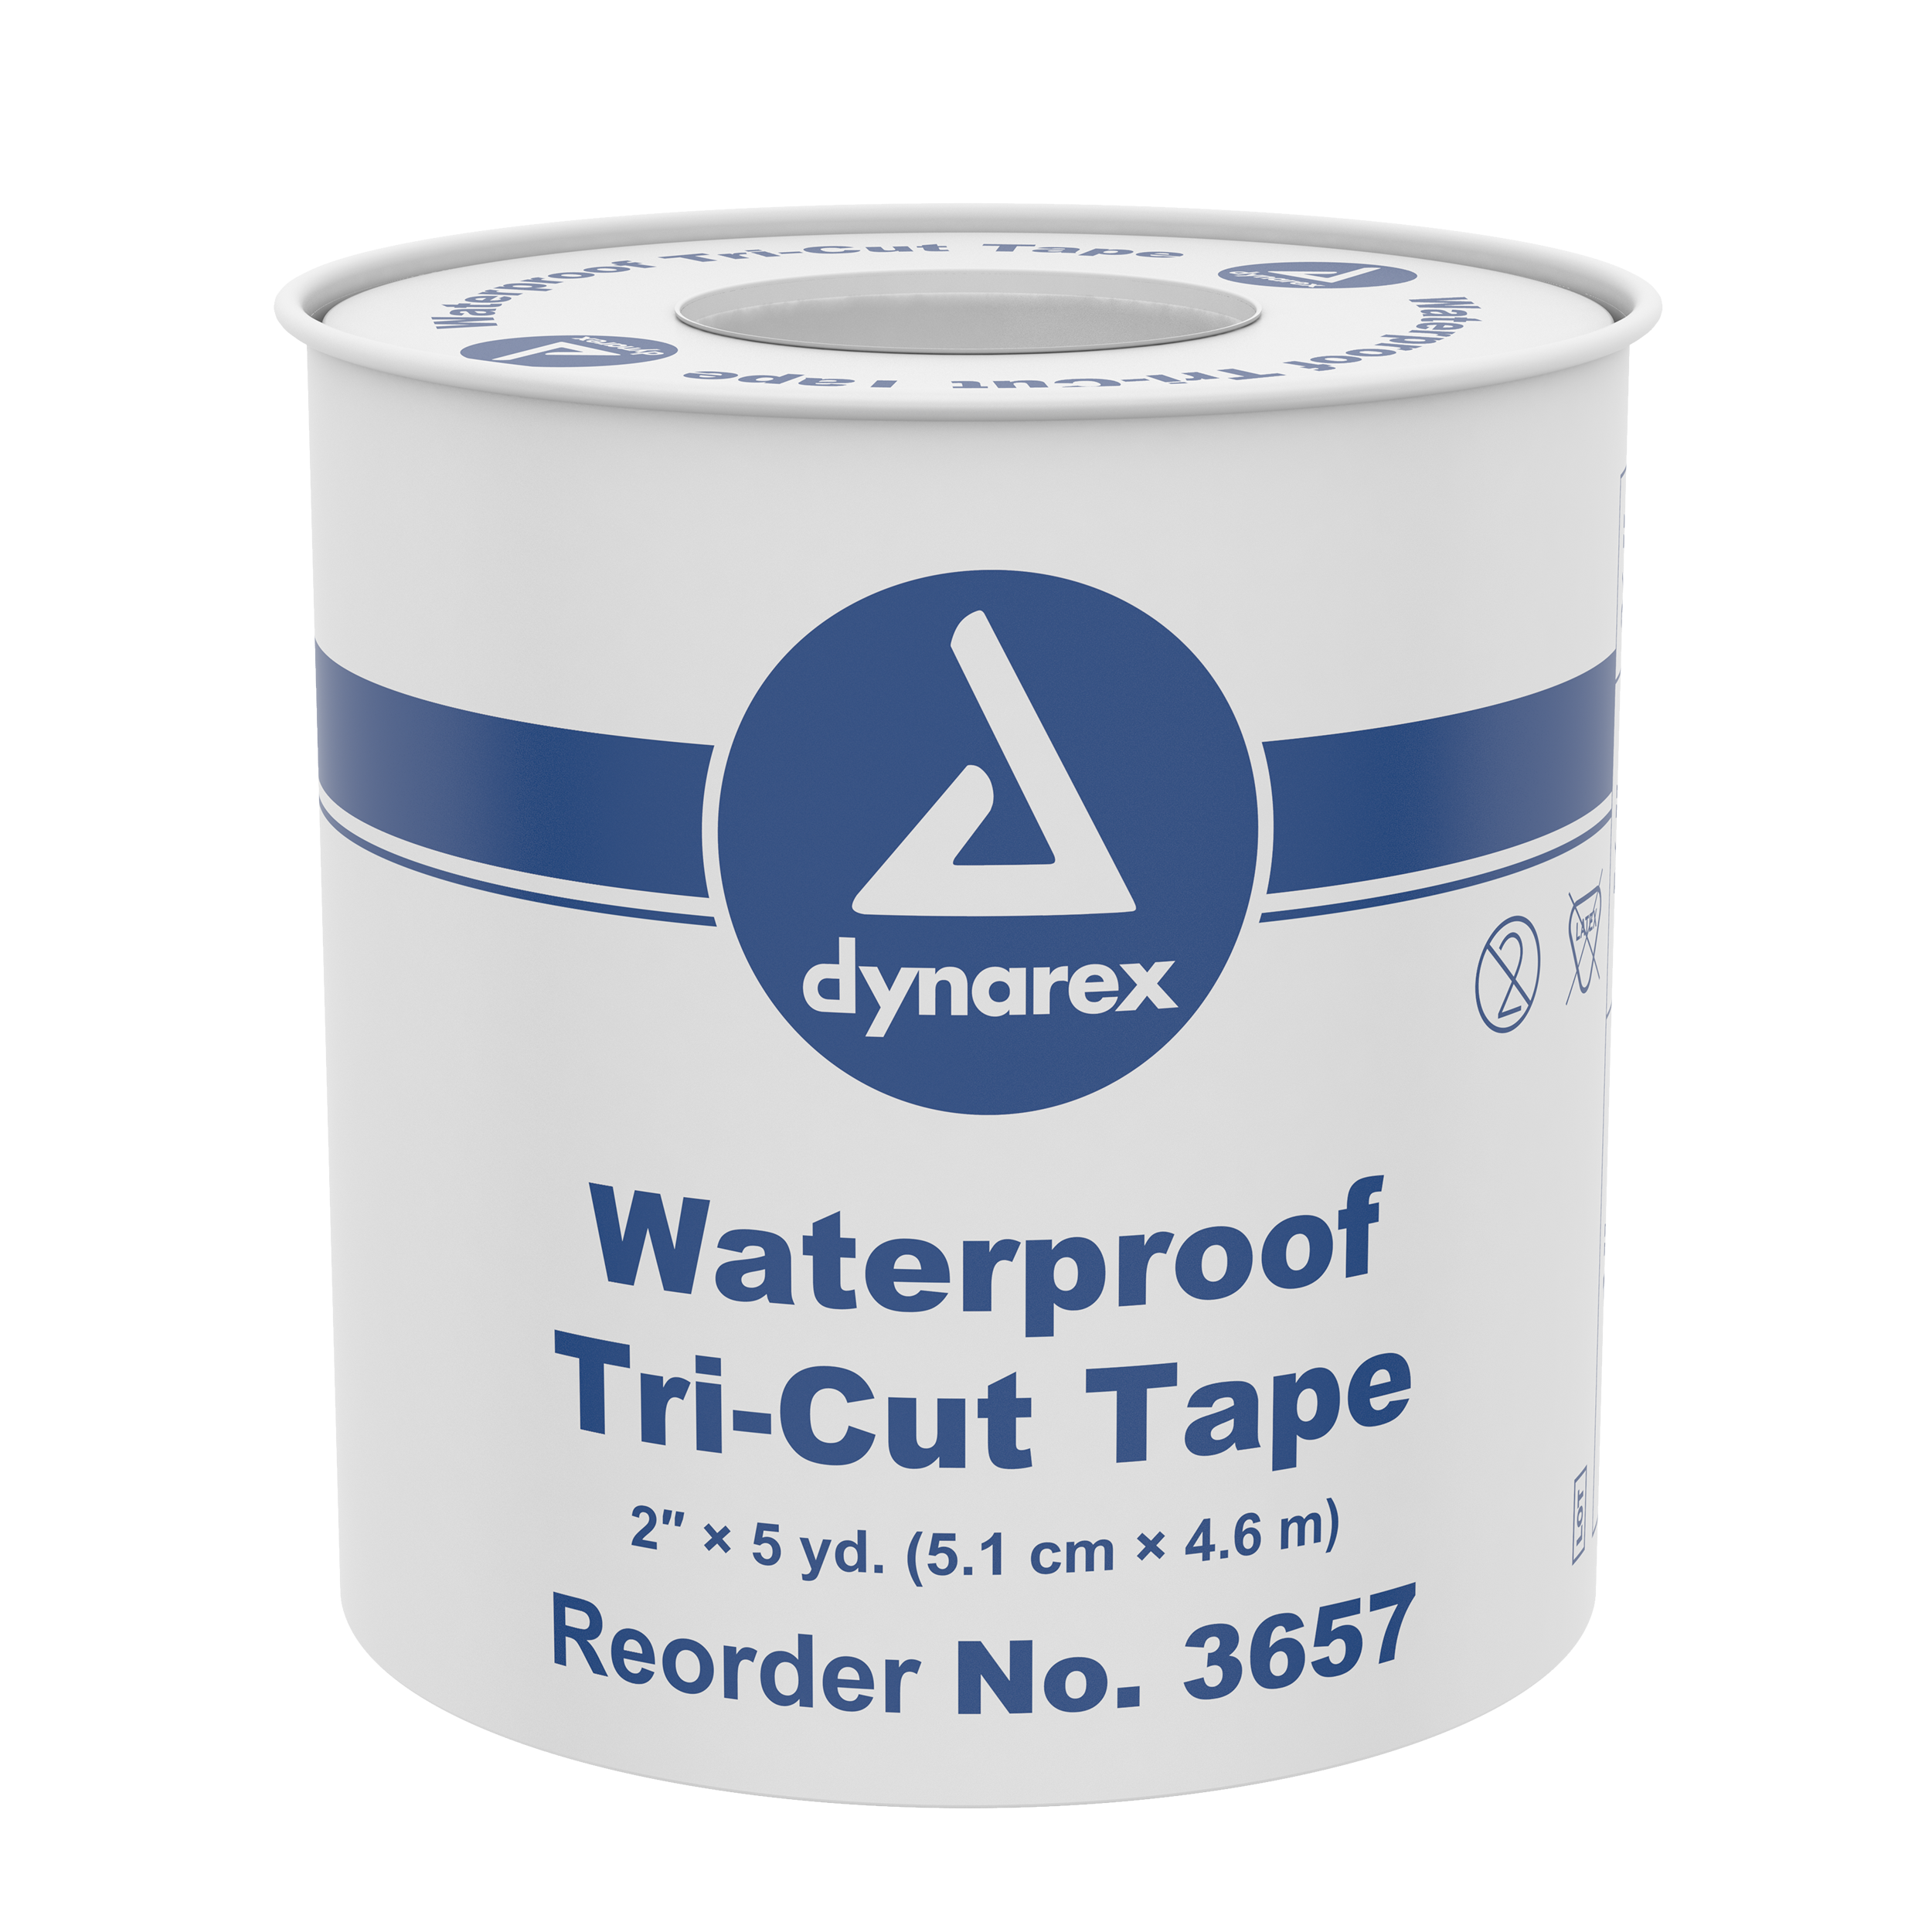 Waterproof Tri-Cut Tape 2